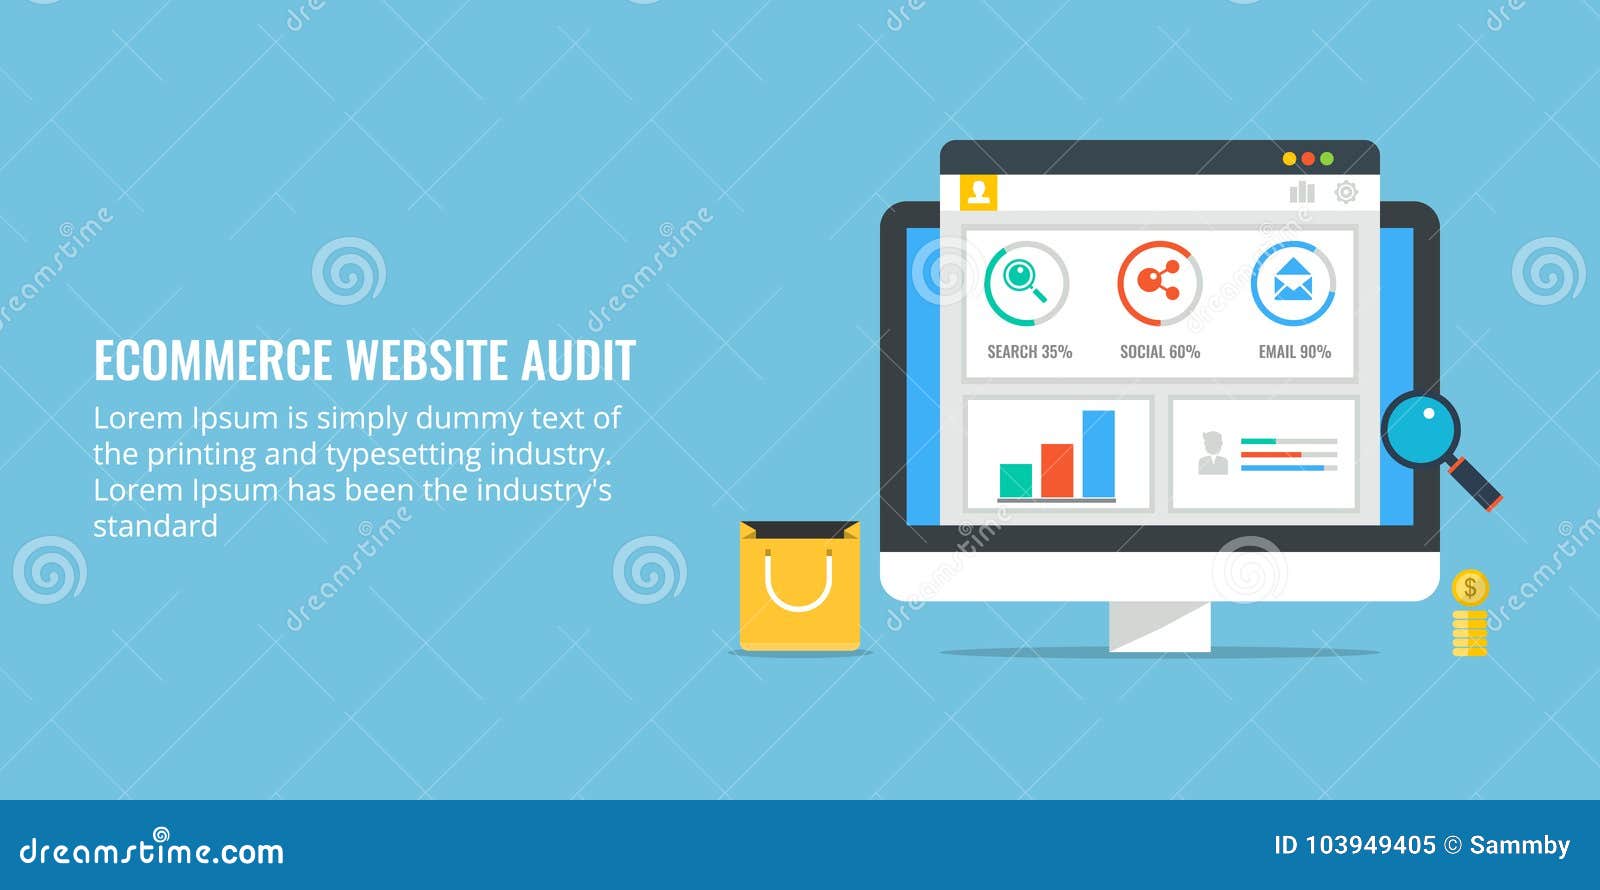 ecommerce website audit - data analysis for marketing. flat  ecommerce banner.